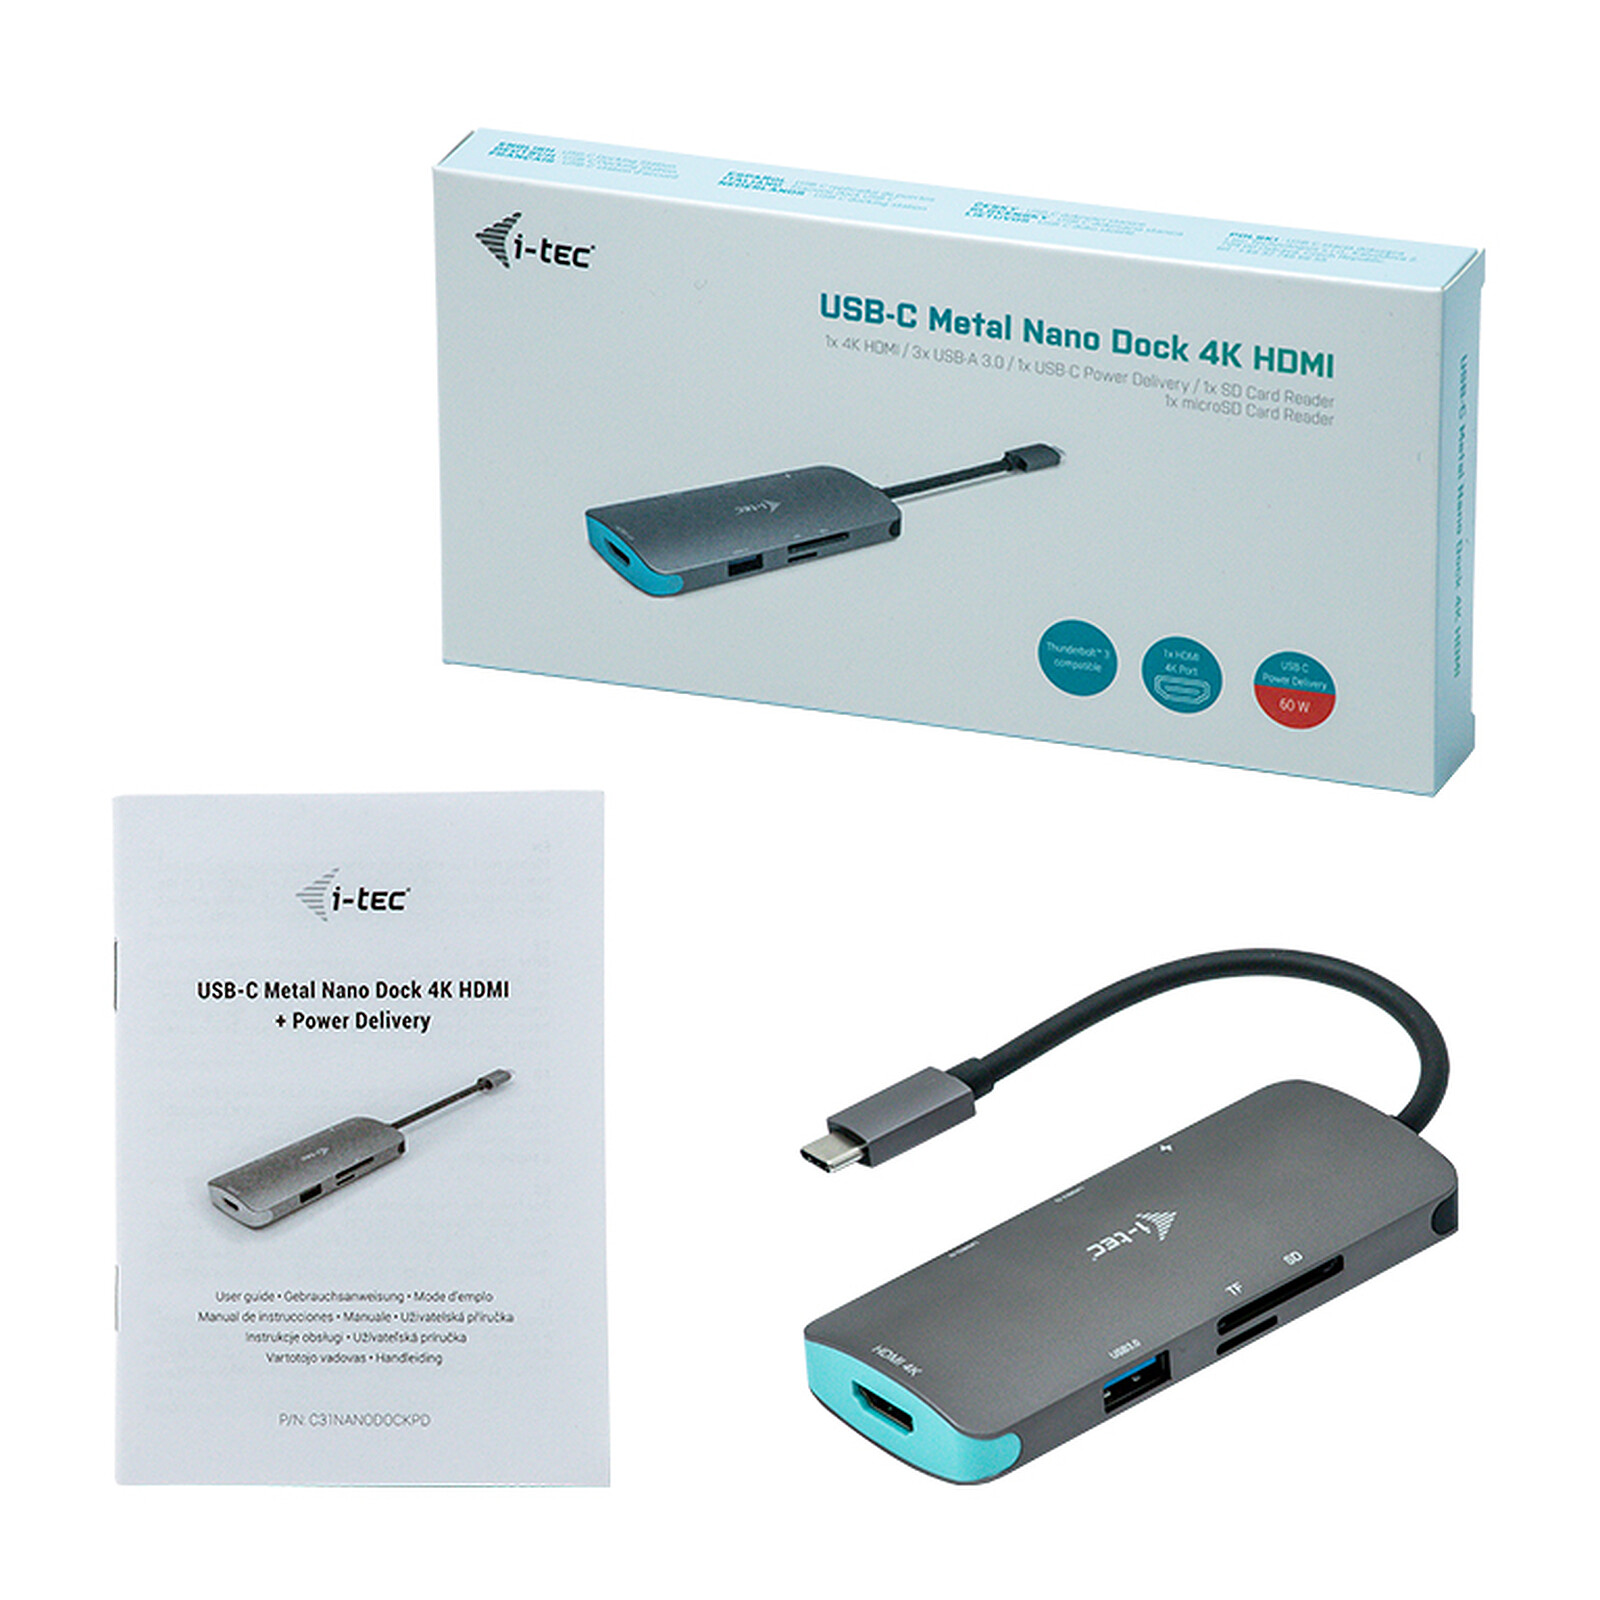 i-tec USB-C Metal Nano Dock 4K HDMI Power Delivery 60W - USB